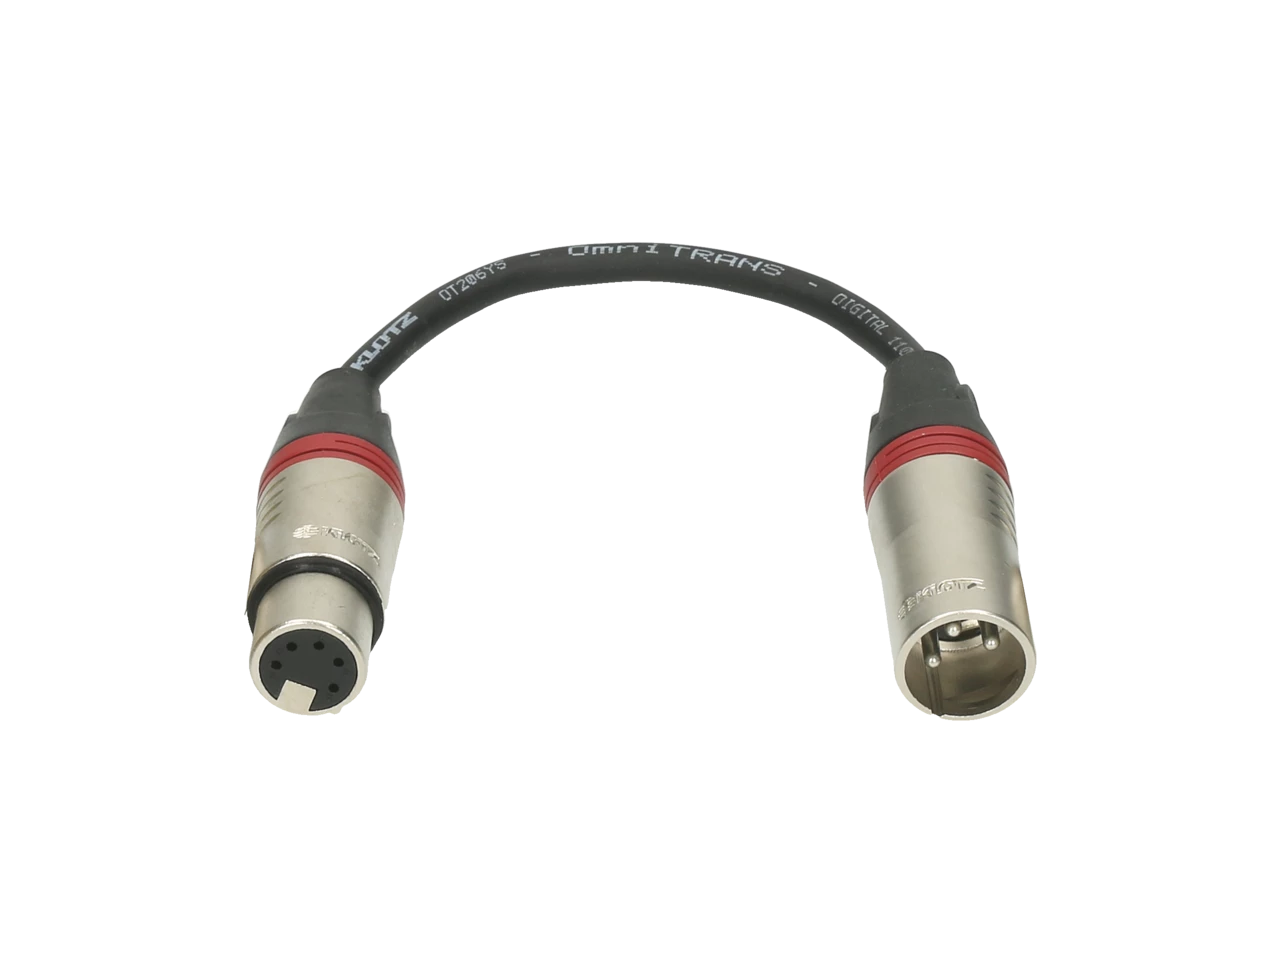 CASCHA Microphone Cable XLR 1 m Cable para micrófono